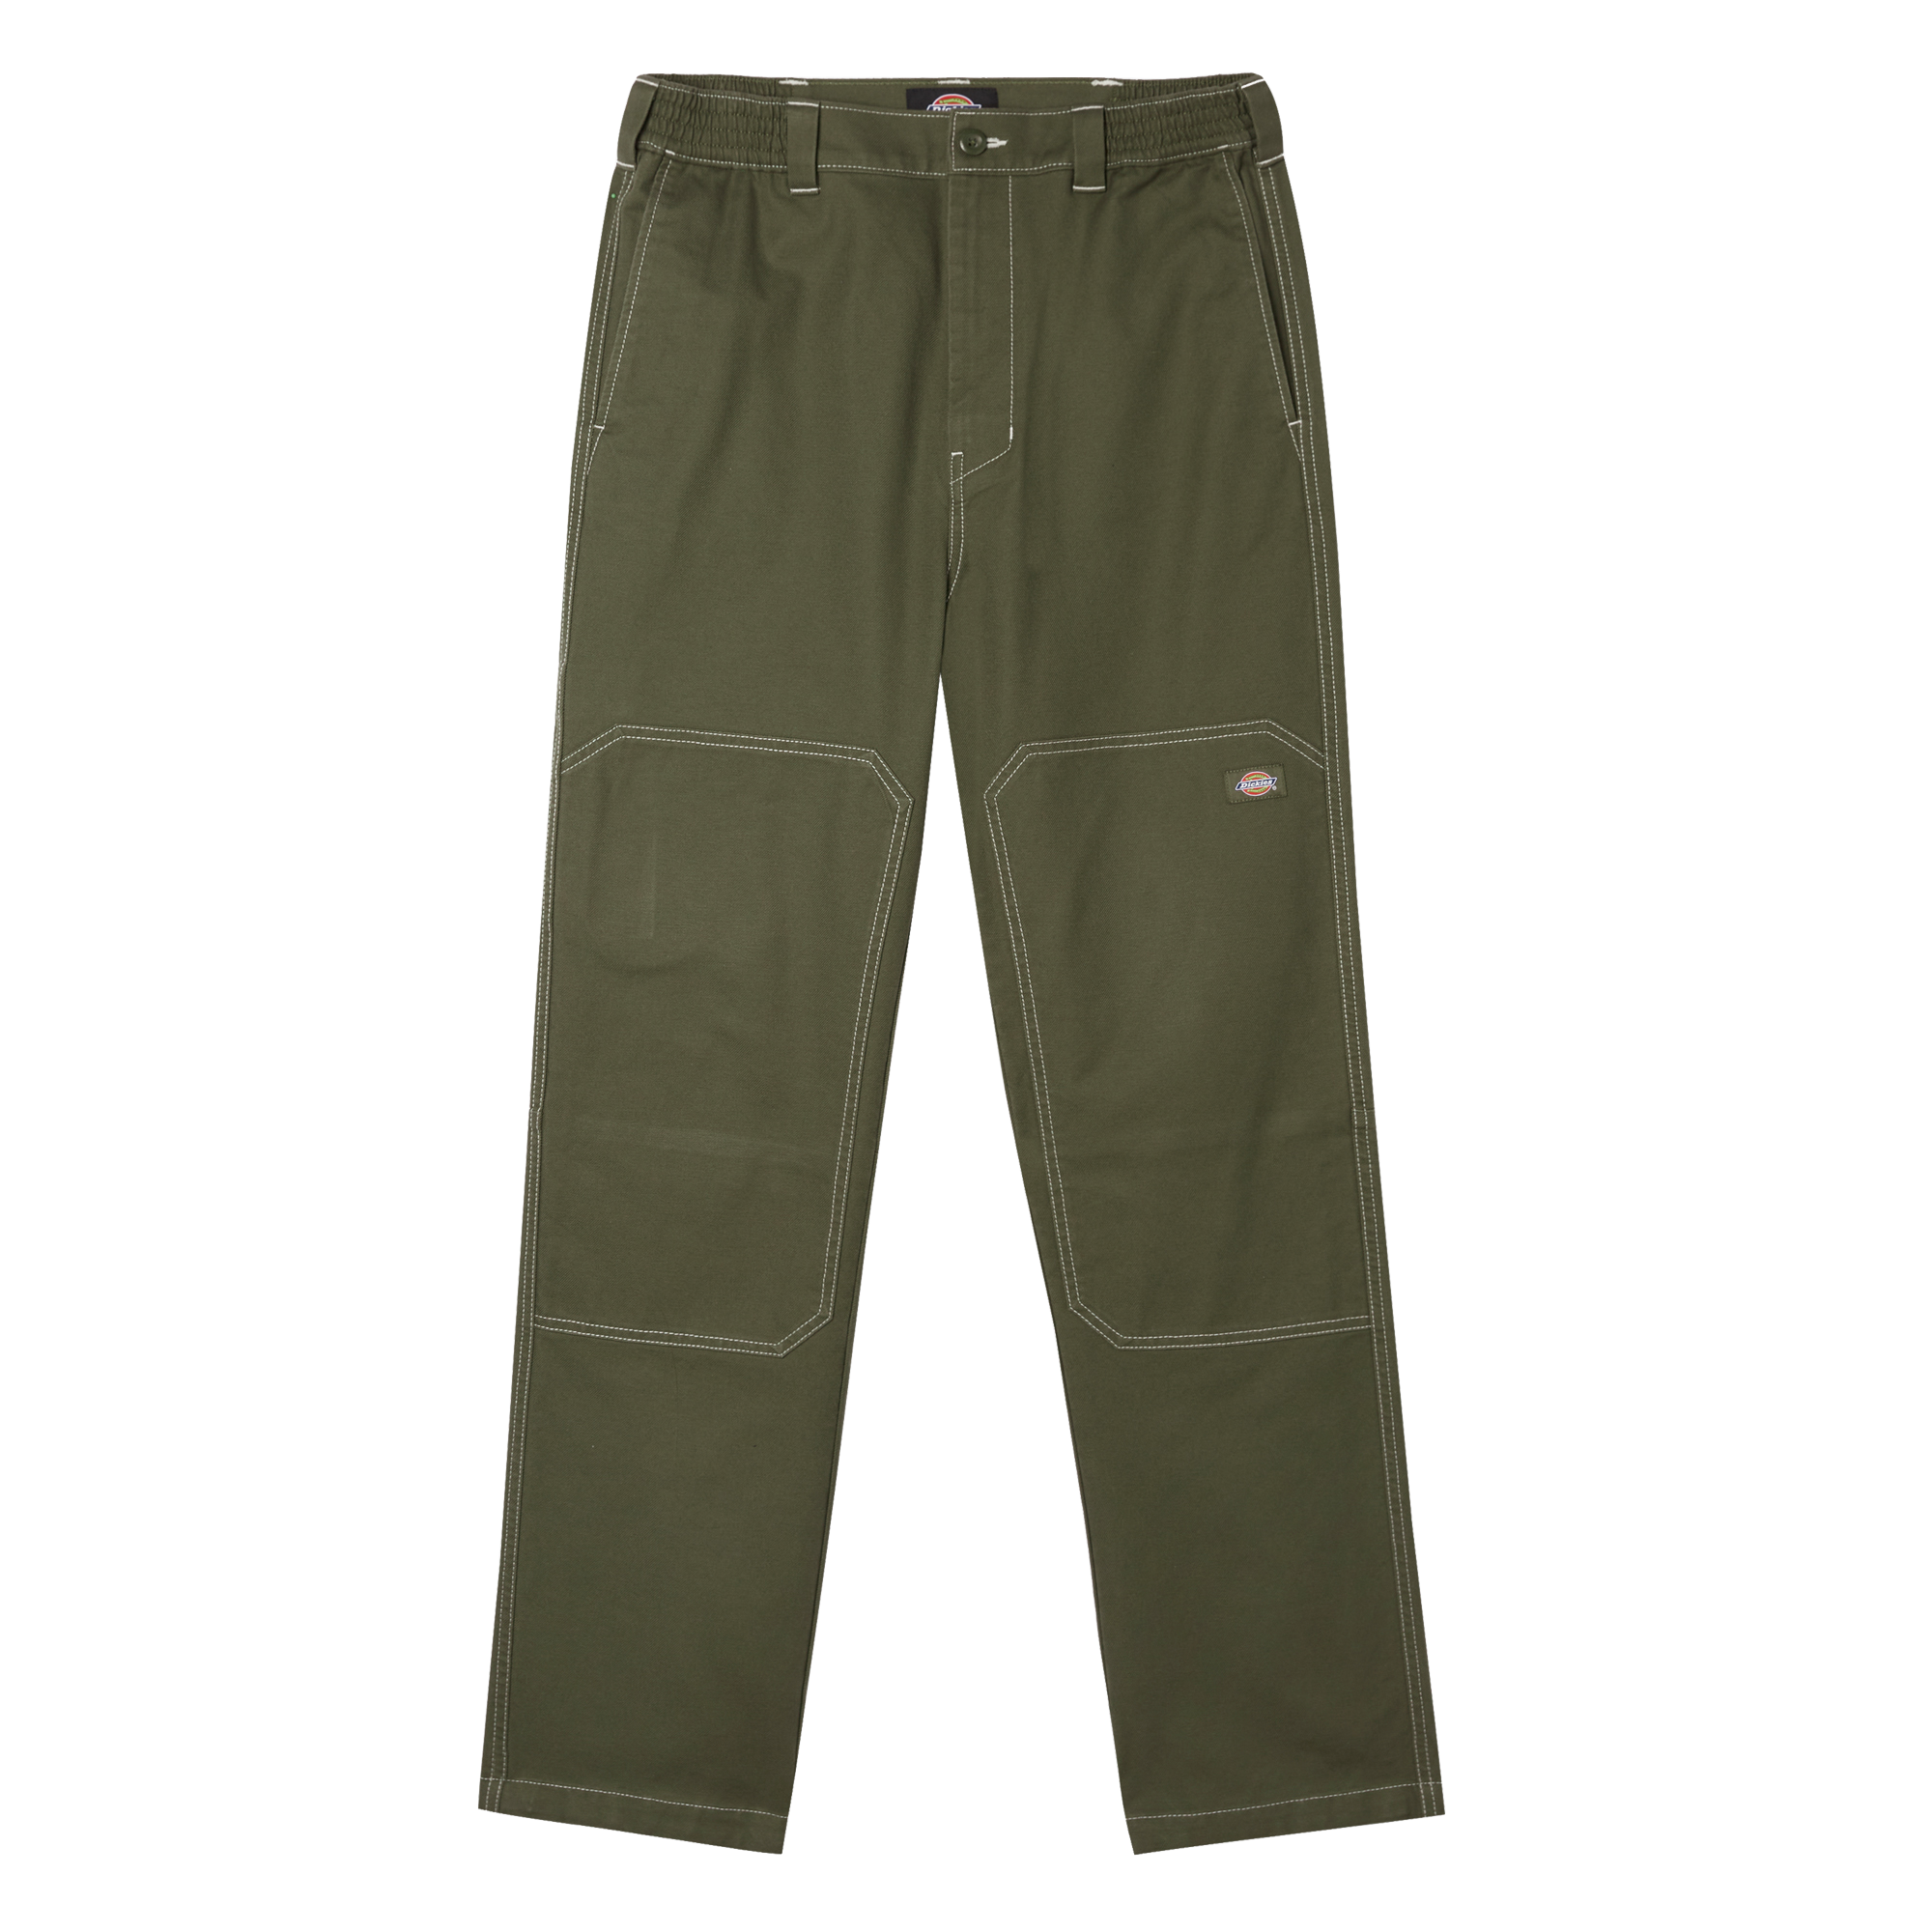 Carhartt Brown Double Knee Pants | Knee pants, Pants, Clothes design